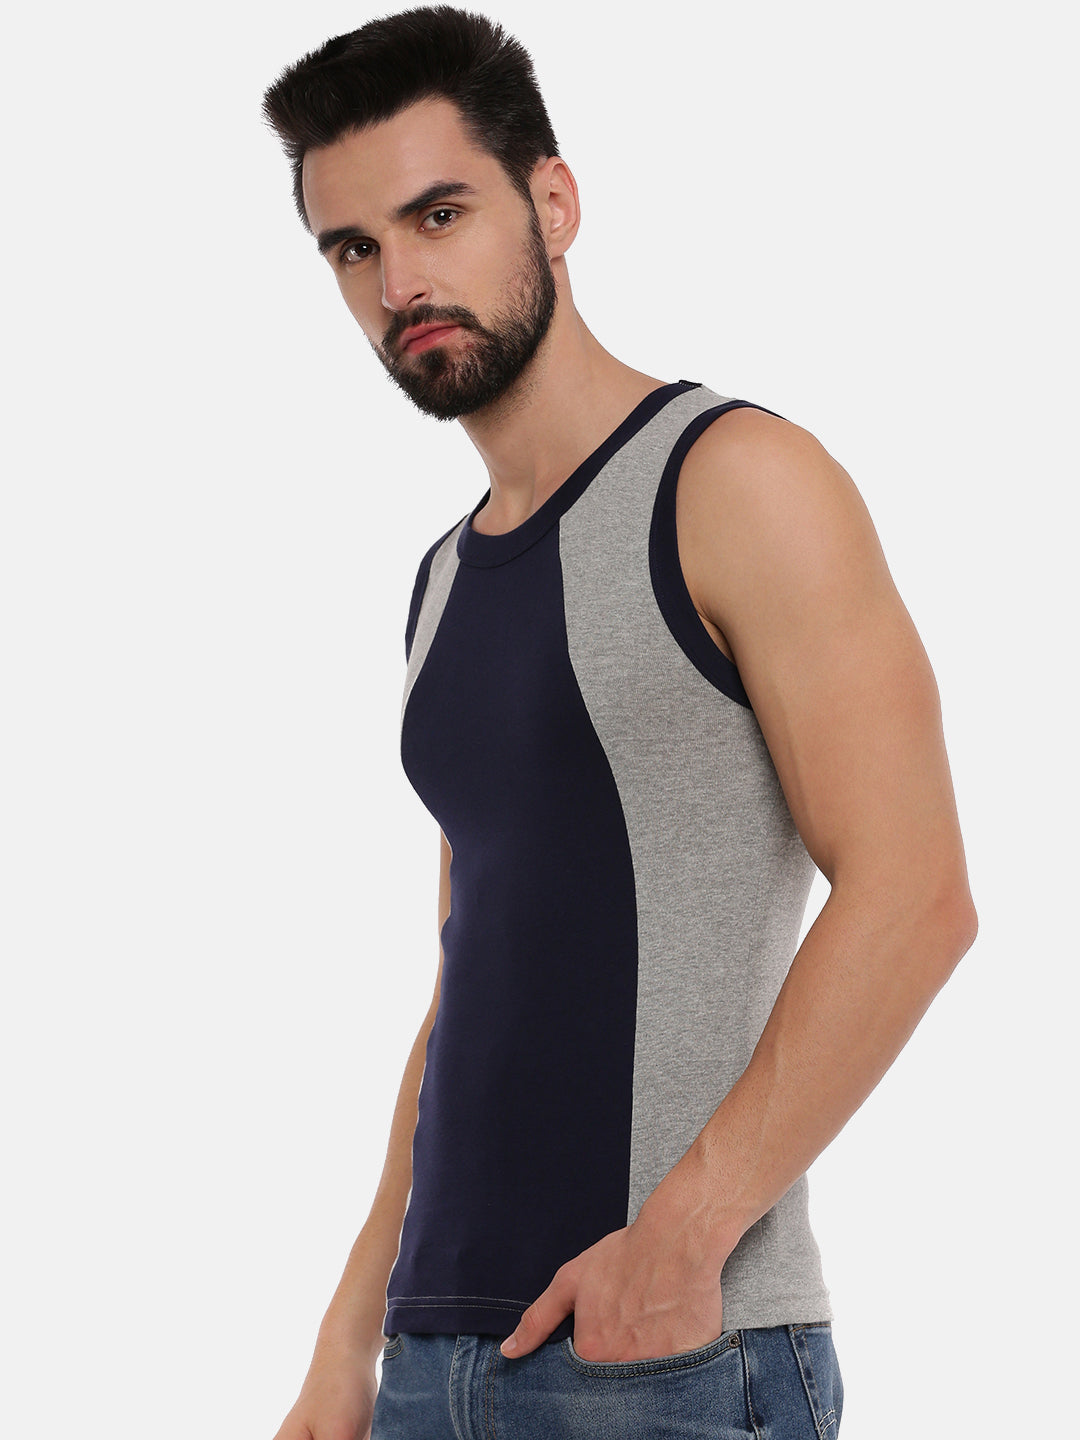 Ramraj Cotton - Feel the utmost comfort with Ramraj cotton's super cool  vests. shop now   #ramrajcotton #cotton #banniyan #vests #stylish #cool #summerwear  #cottonwear #comfort